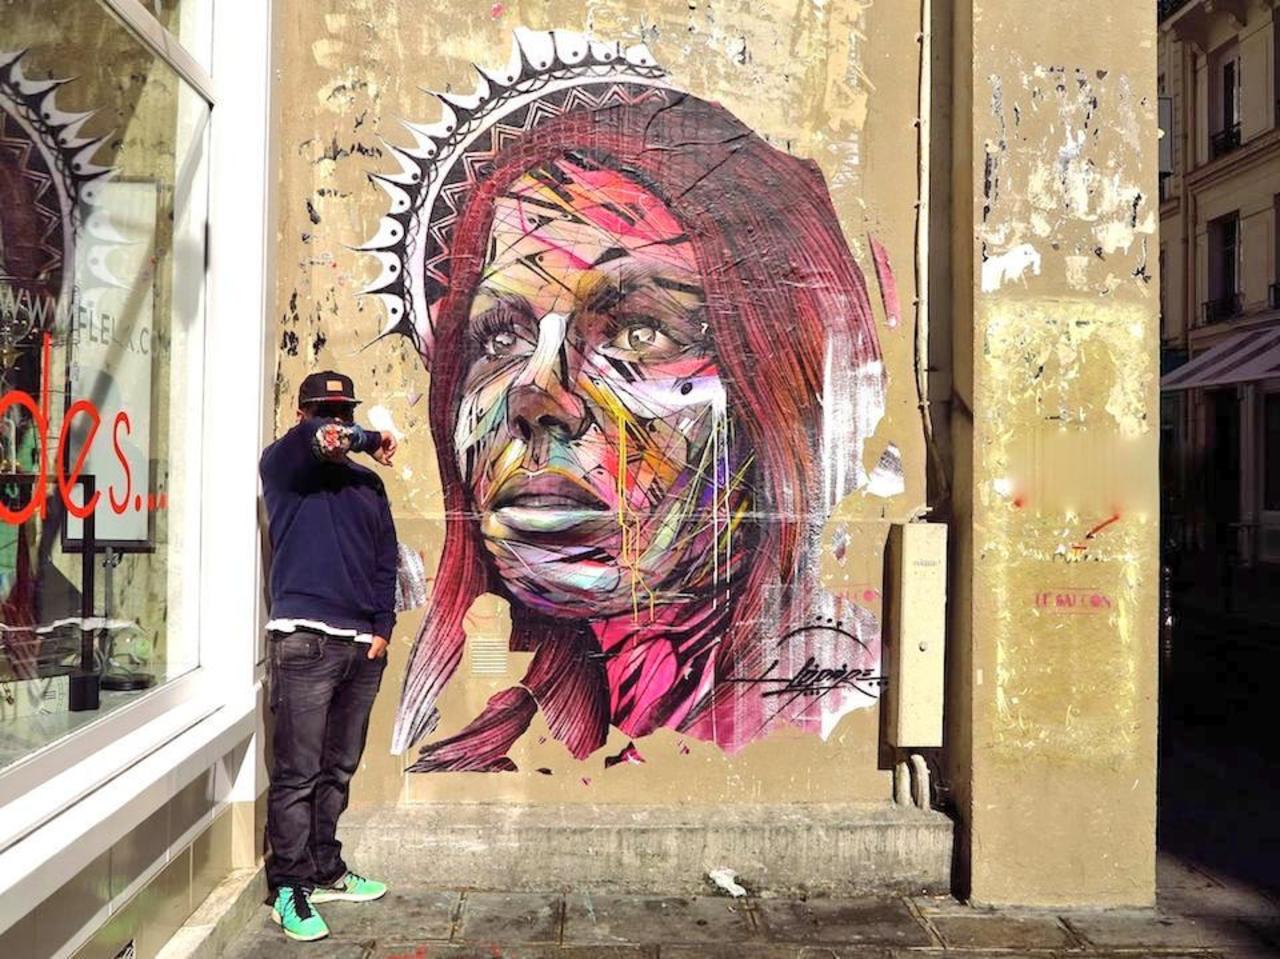 “@Pitchuskita: Hopare
France

#streetart #art #graffiti #walls http://t.co/2ylcUvyRFh”